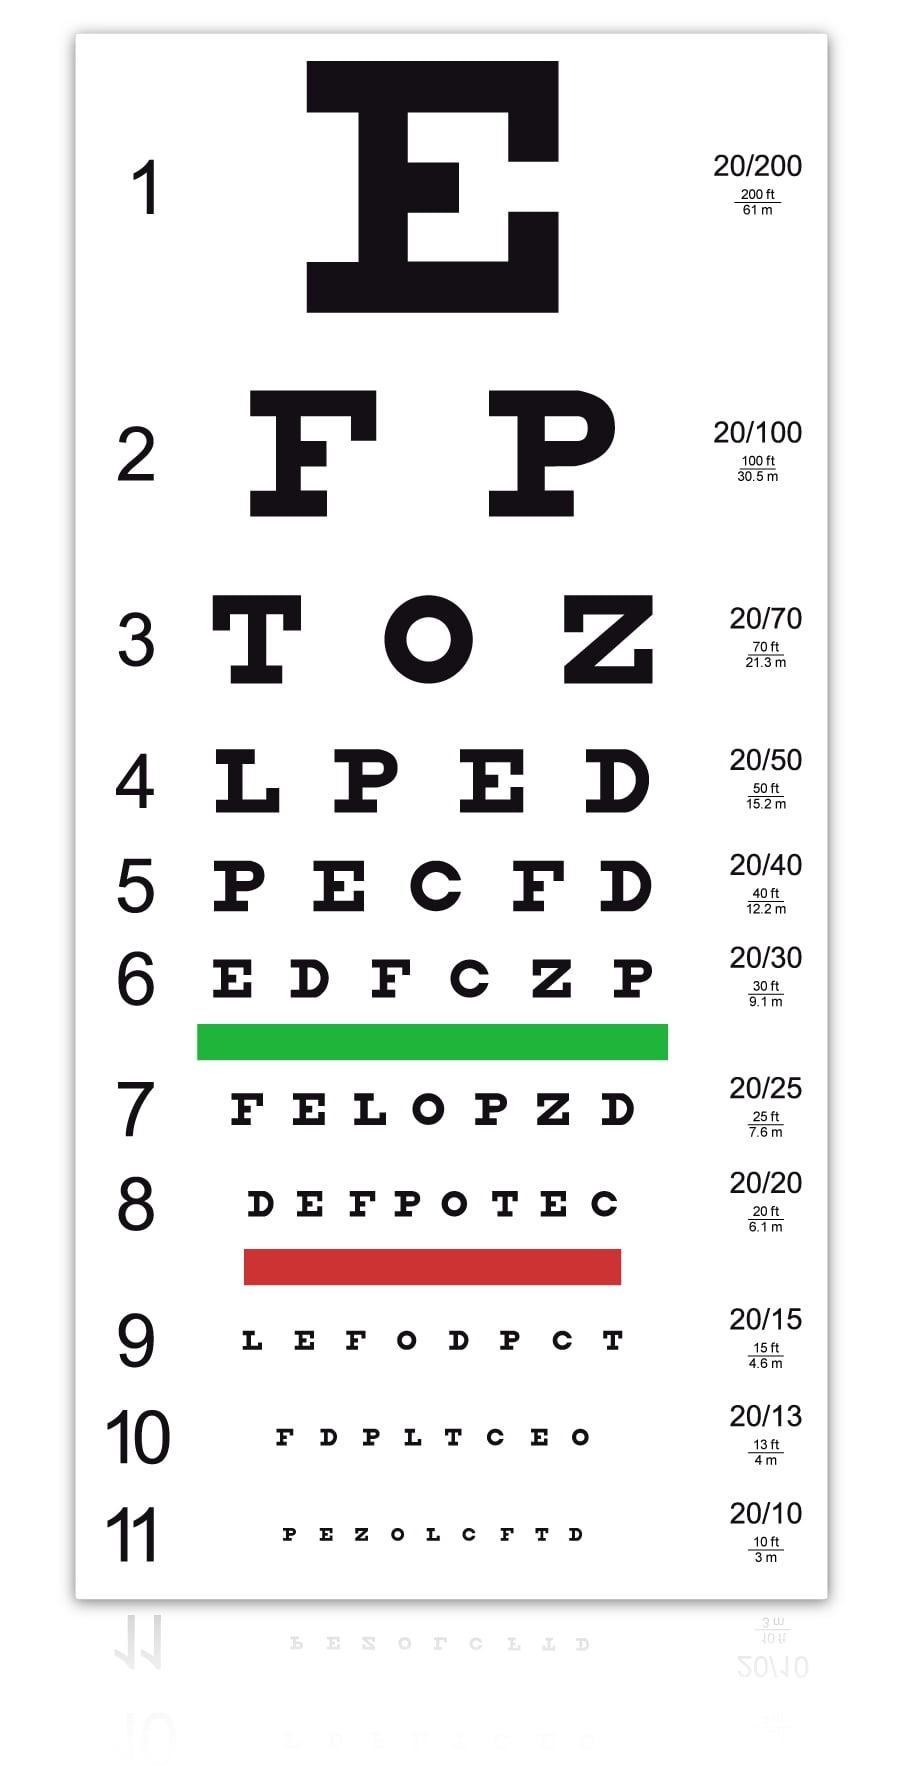 Trusty Eye Exam Chart – Standard Snellen Vision Test at 20 Feet – VINYL  BANNER 